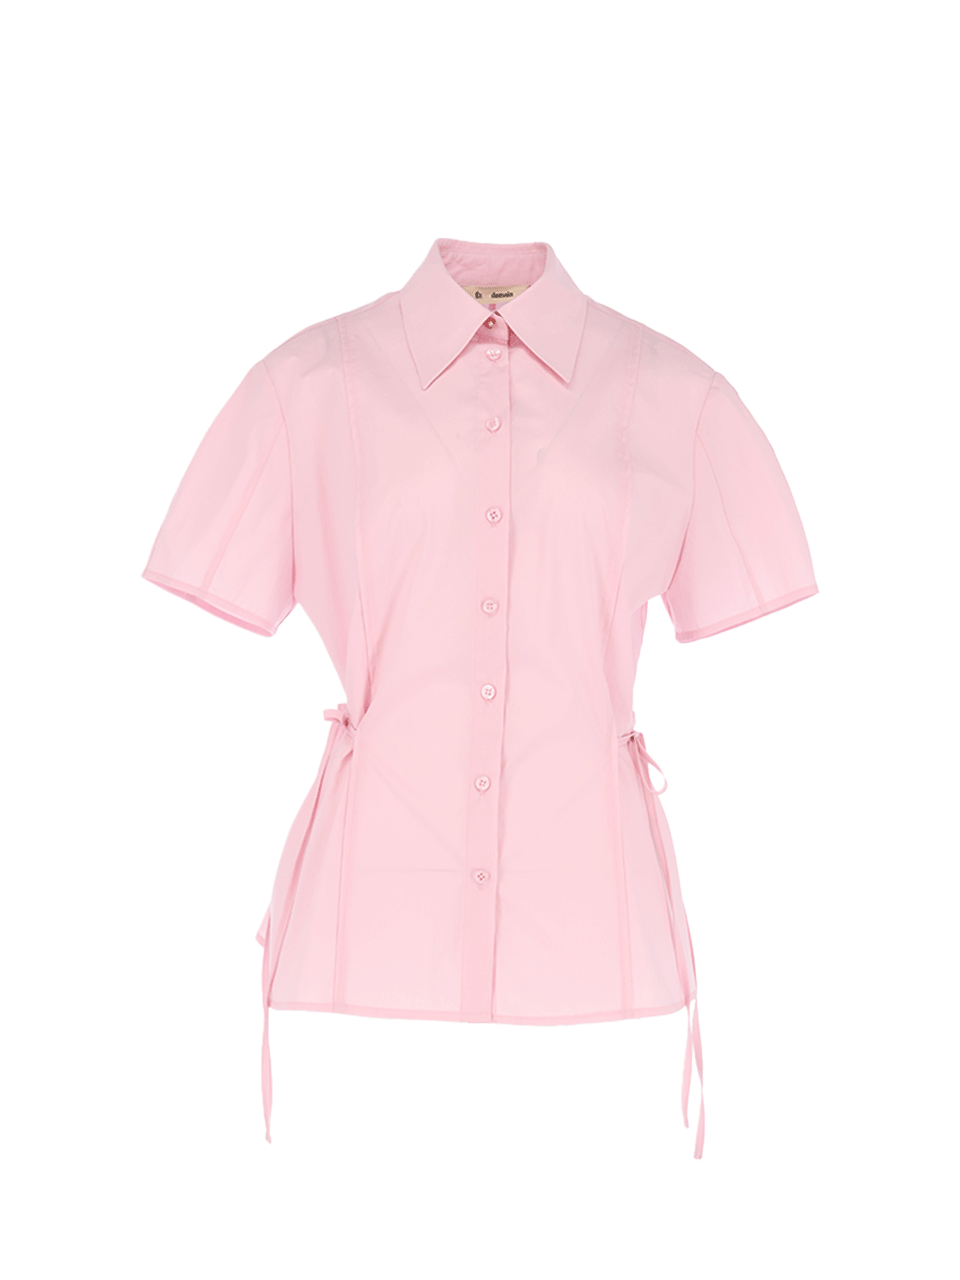 Ribbon half shirt - Light Pink